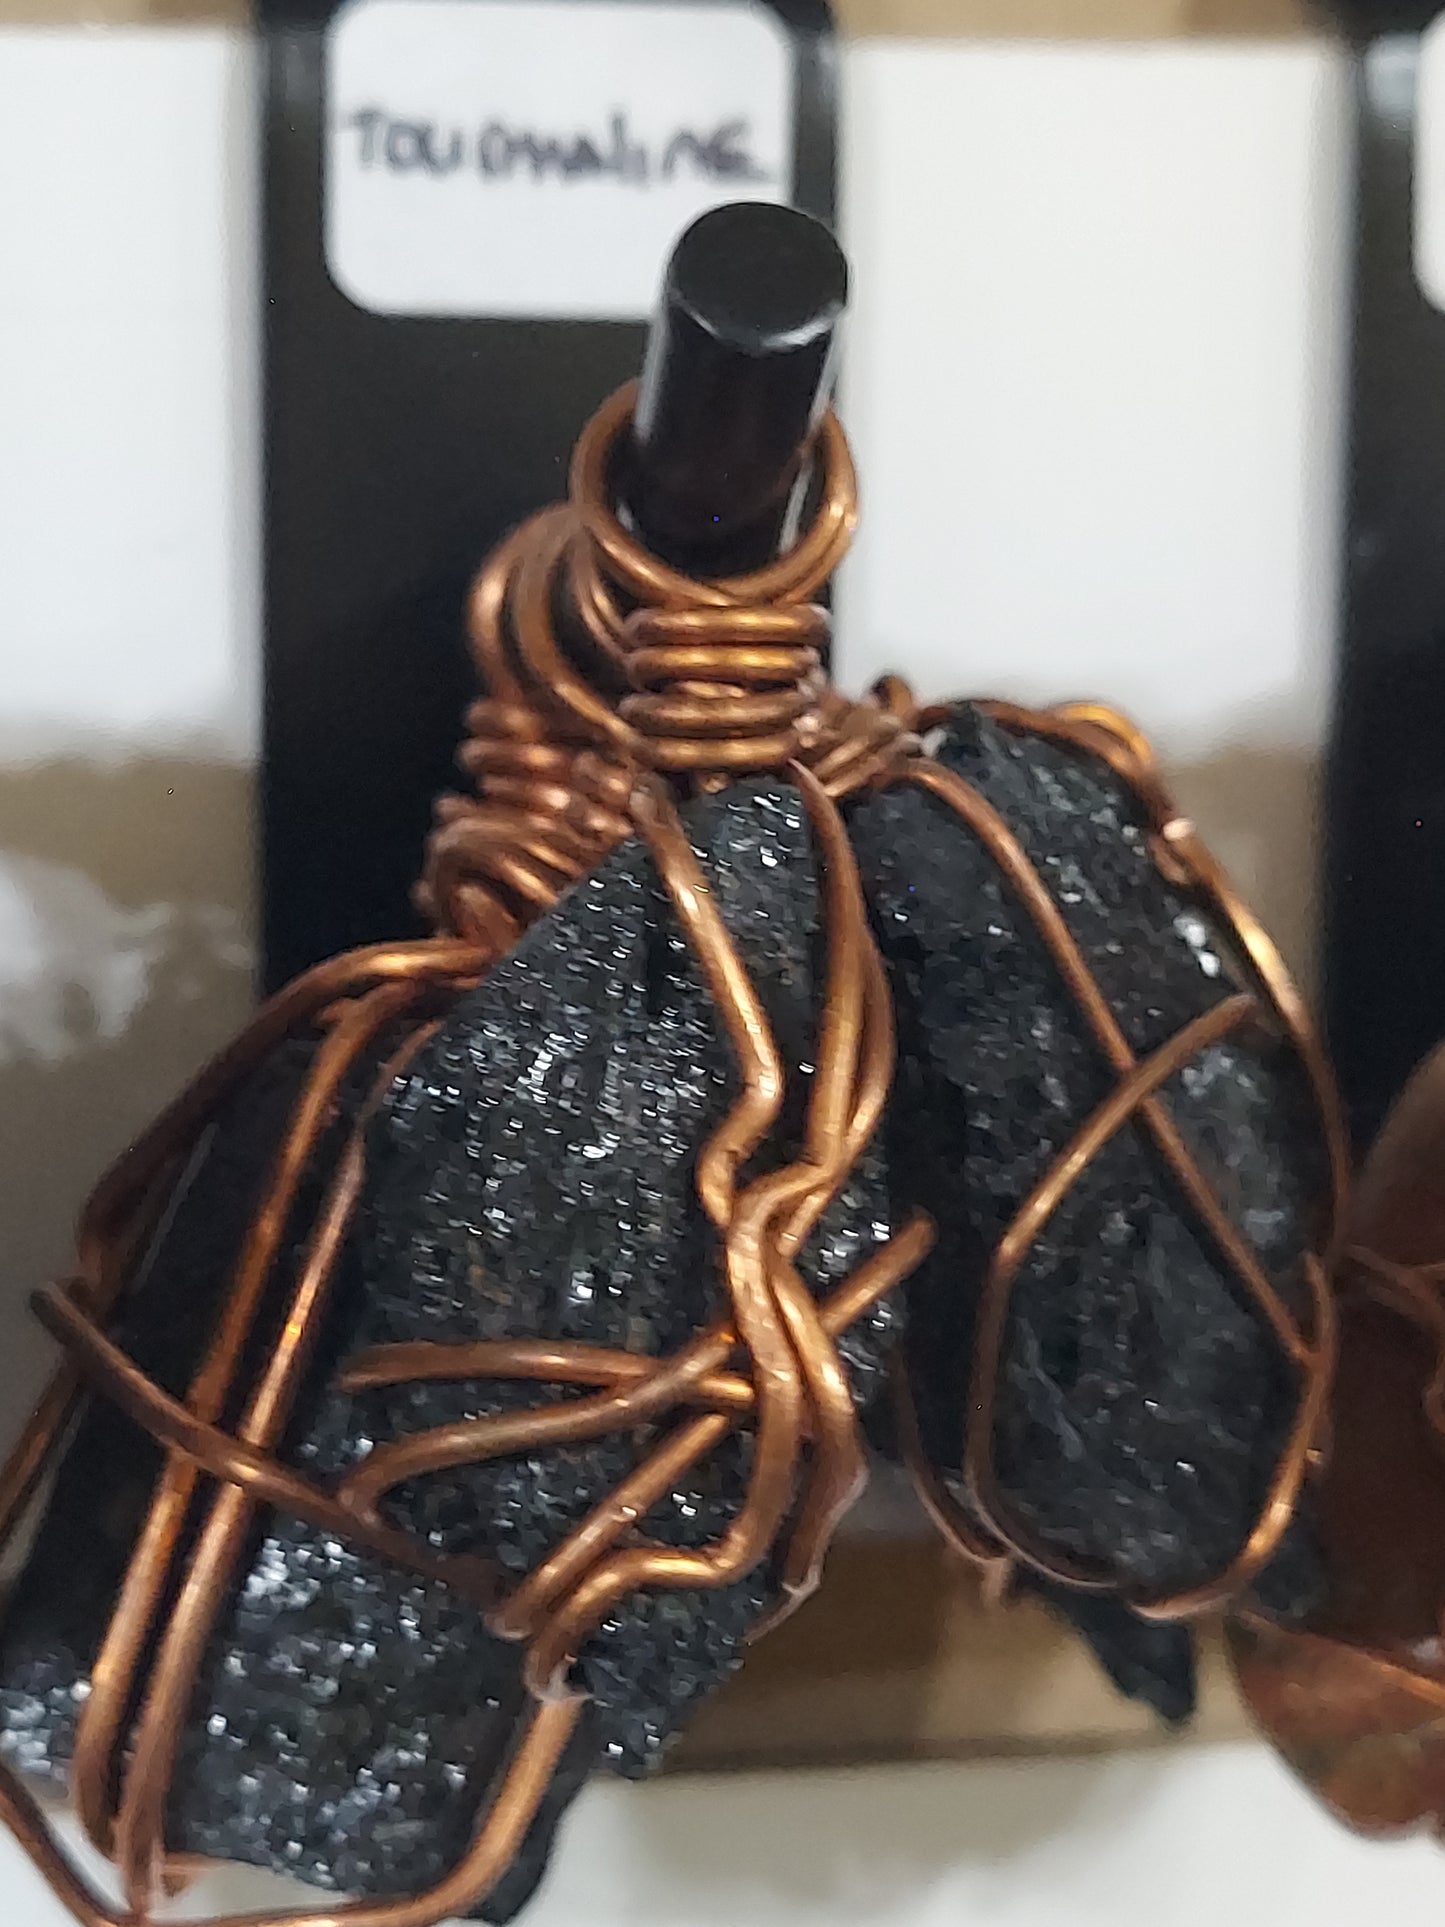 Black Tourmaline Stone Pendant on Necklace Rope